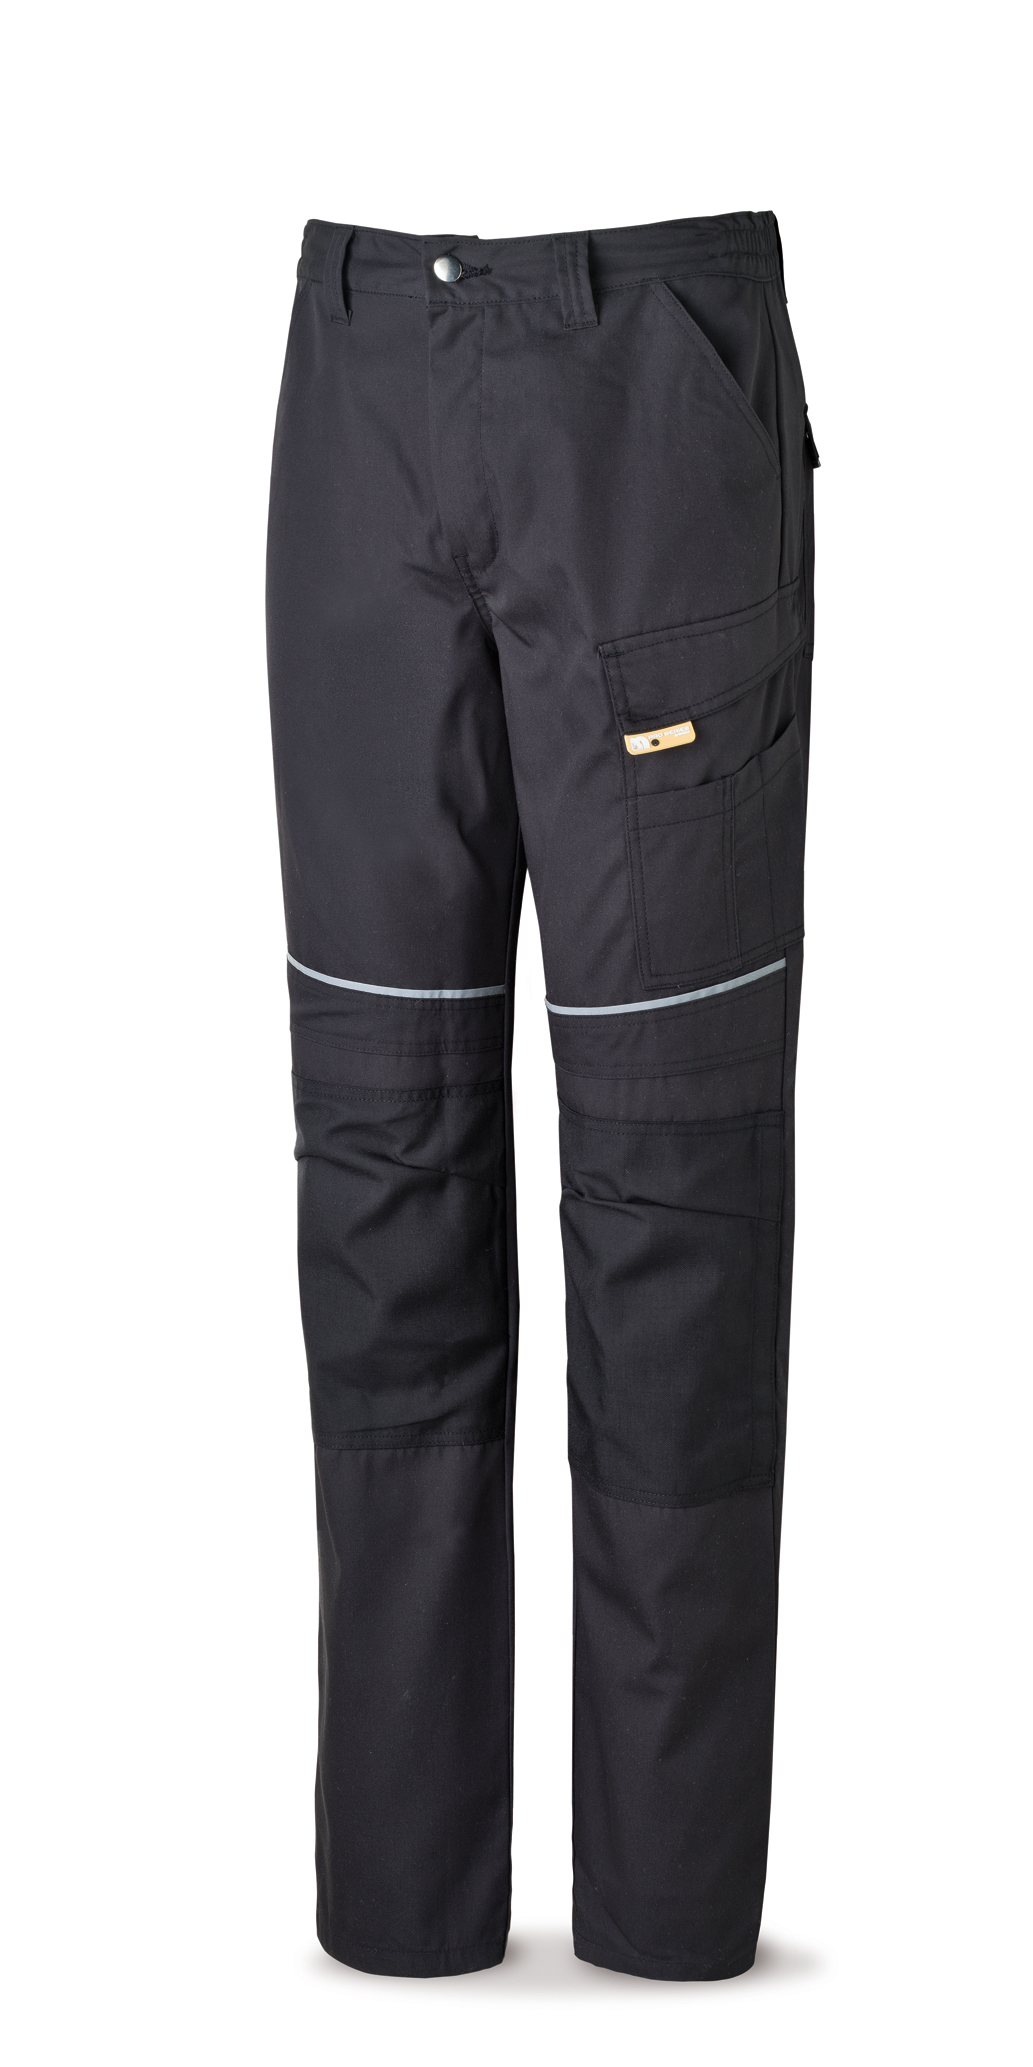 588-PN Workwear Pro Series Tergal 245gr. Canvas trousers. Black.